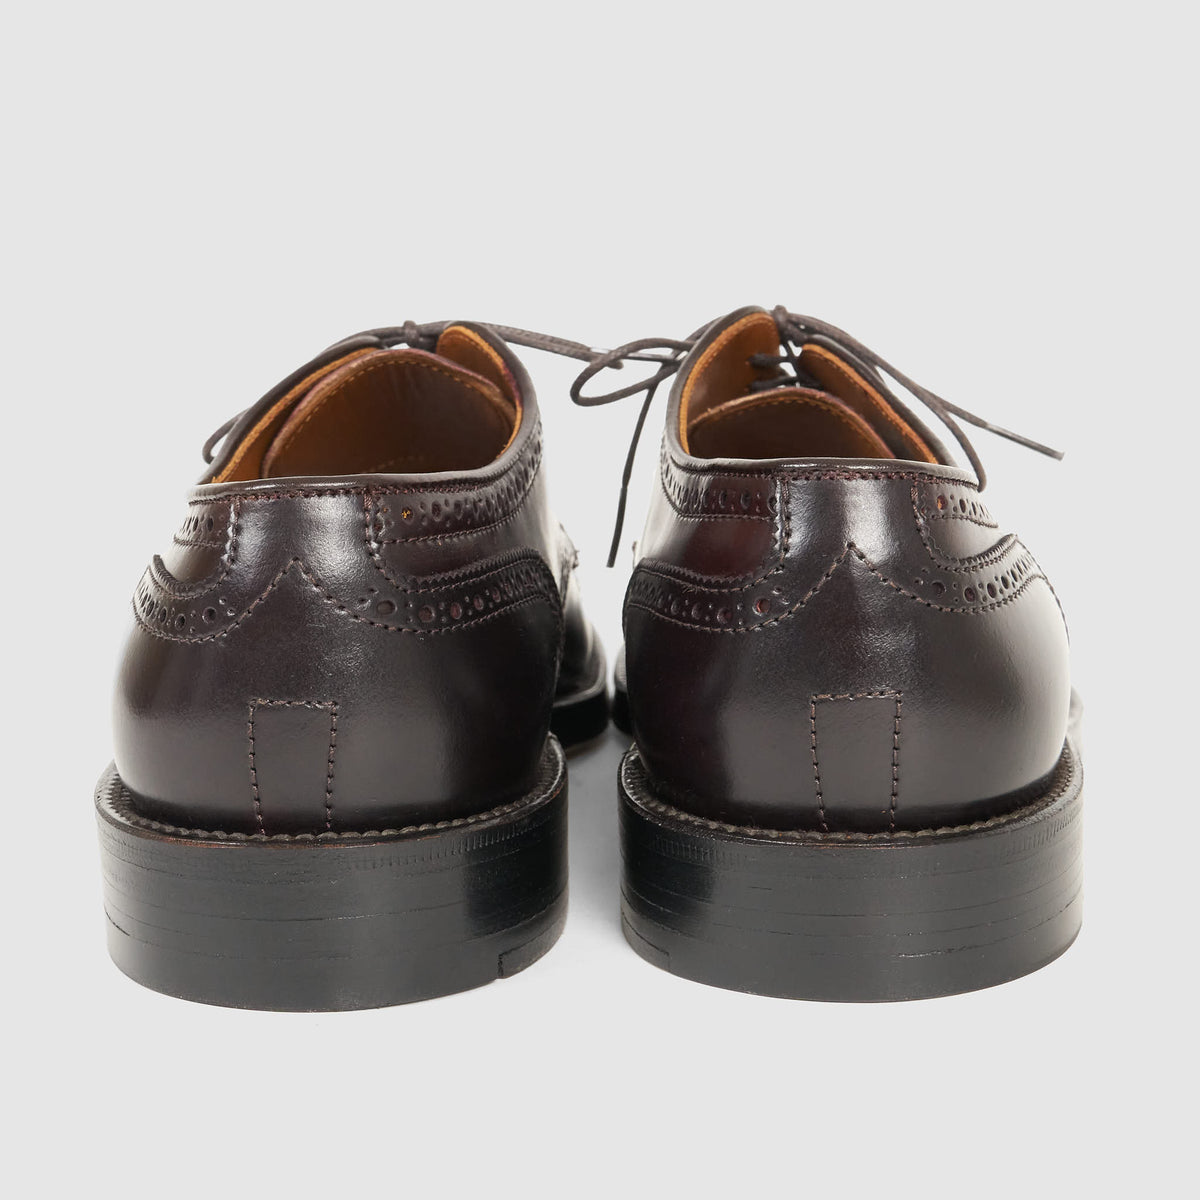 Alden Shoes Oxford Brogue 2145 Leather Shoes